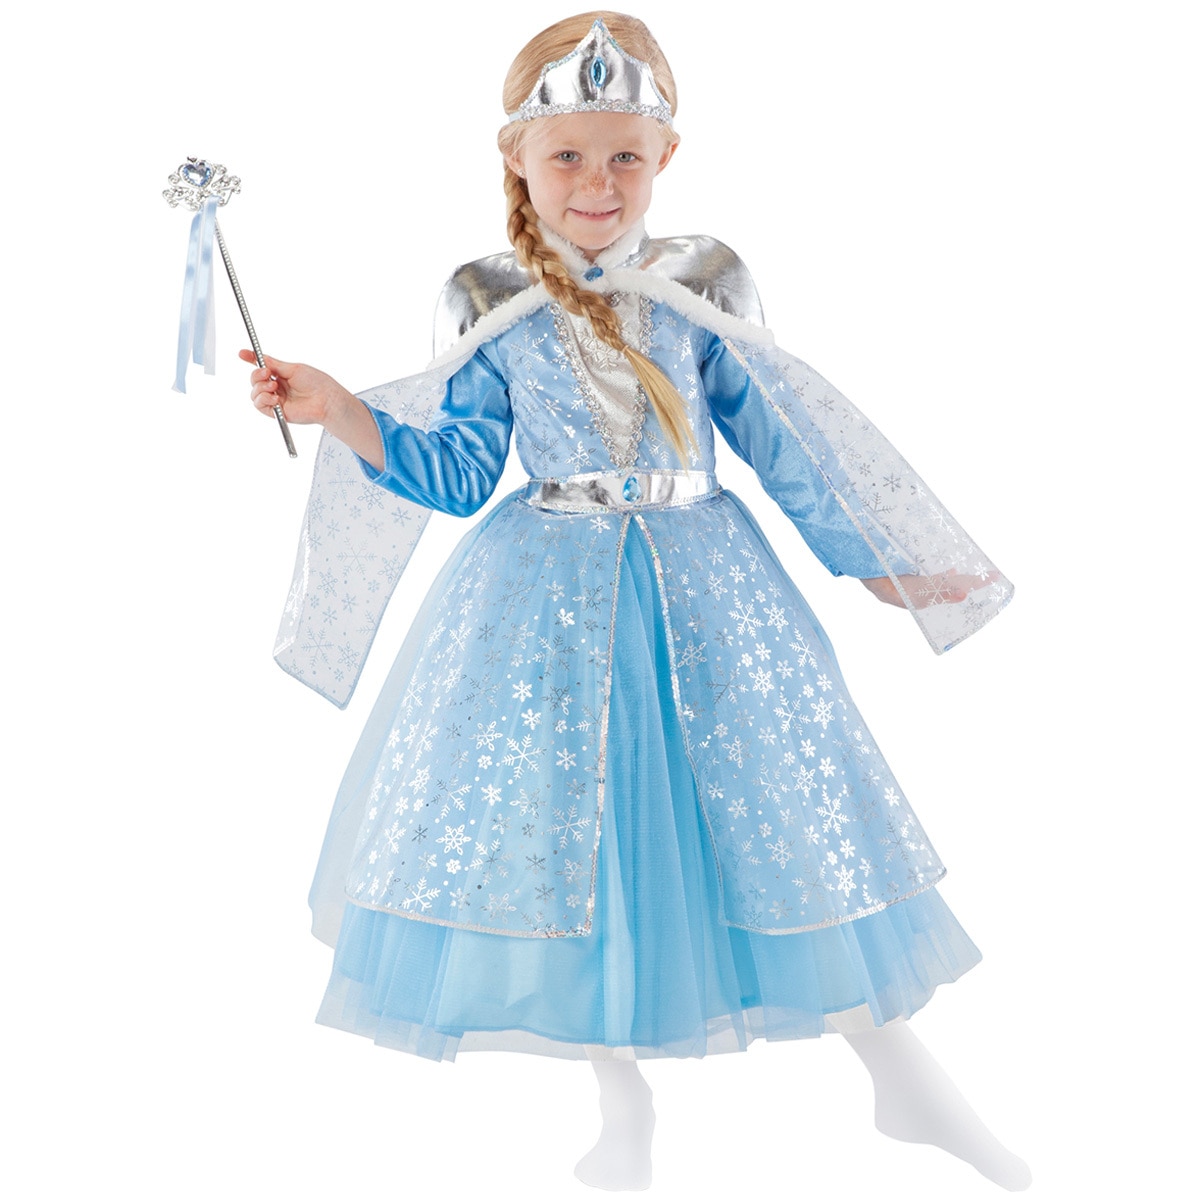 Teetot Princess Factory Costumes - Snow Princess